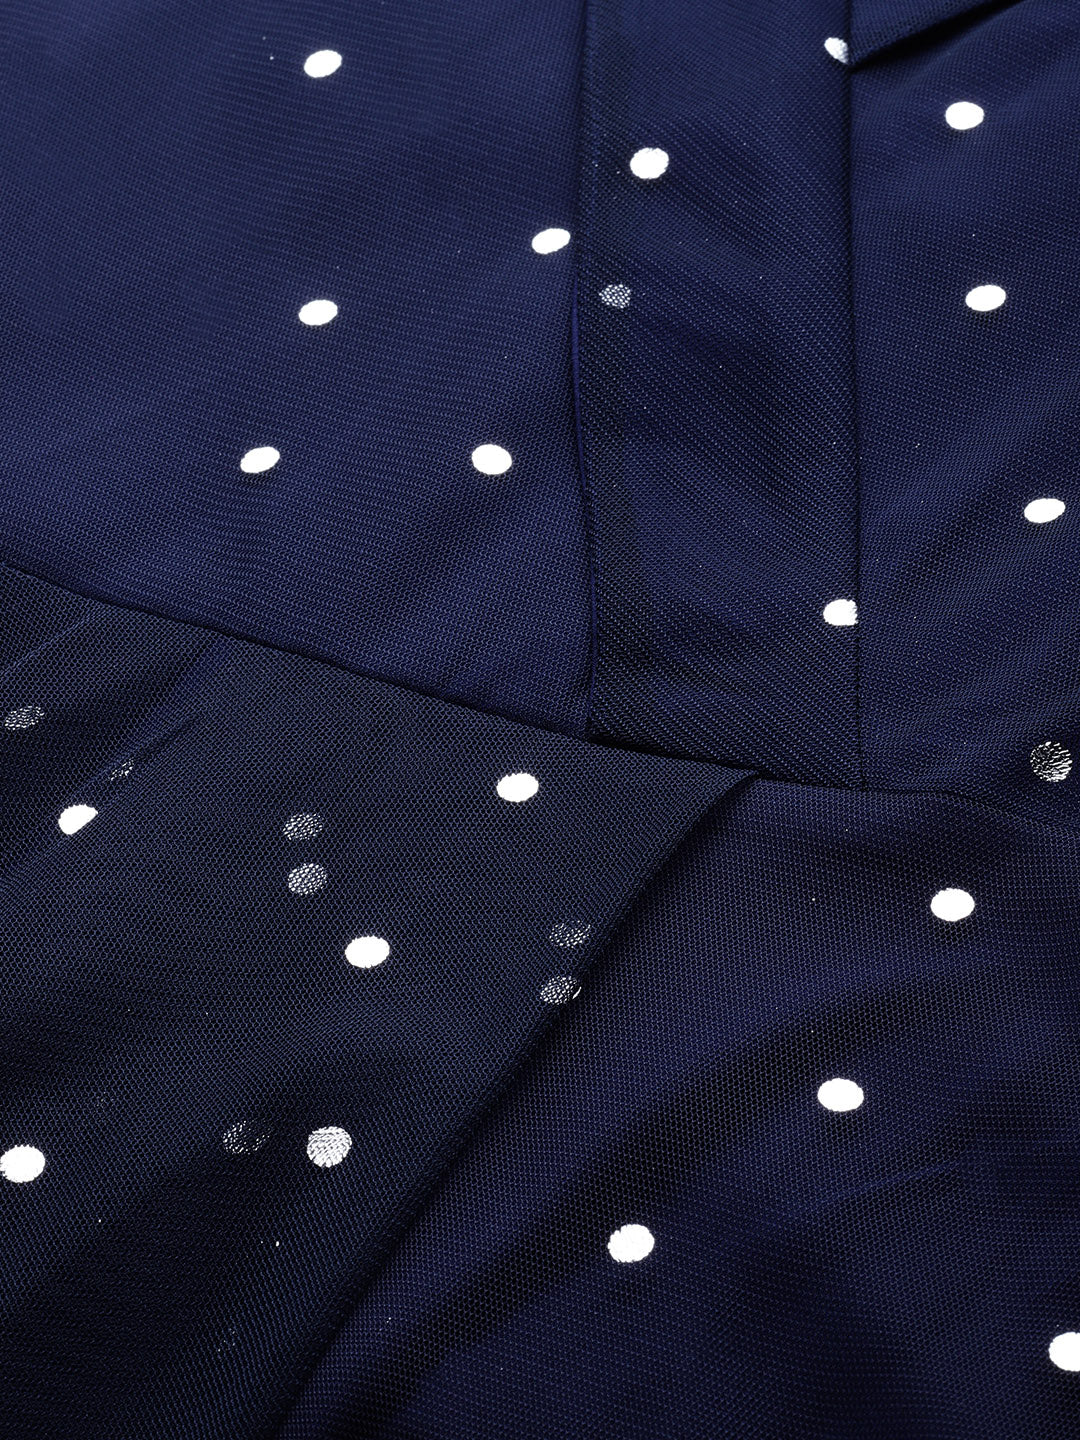 Women's Navy Blue Net & Crepe Silver Toned Polka Dots Printed Maxi Dress- Ahalyaa